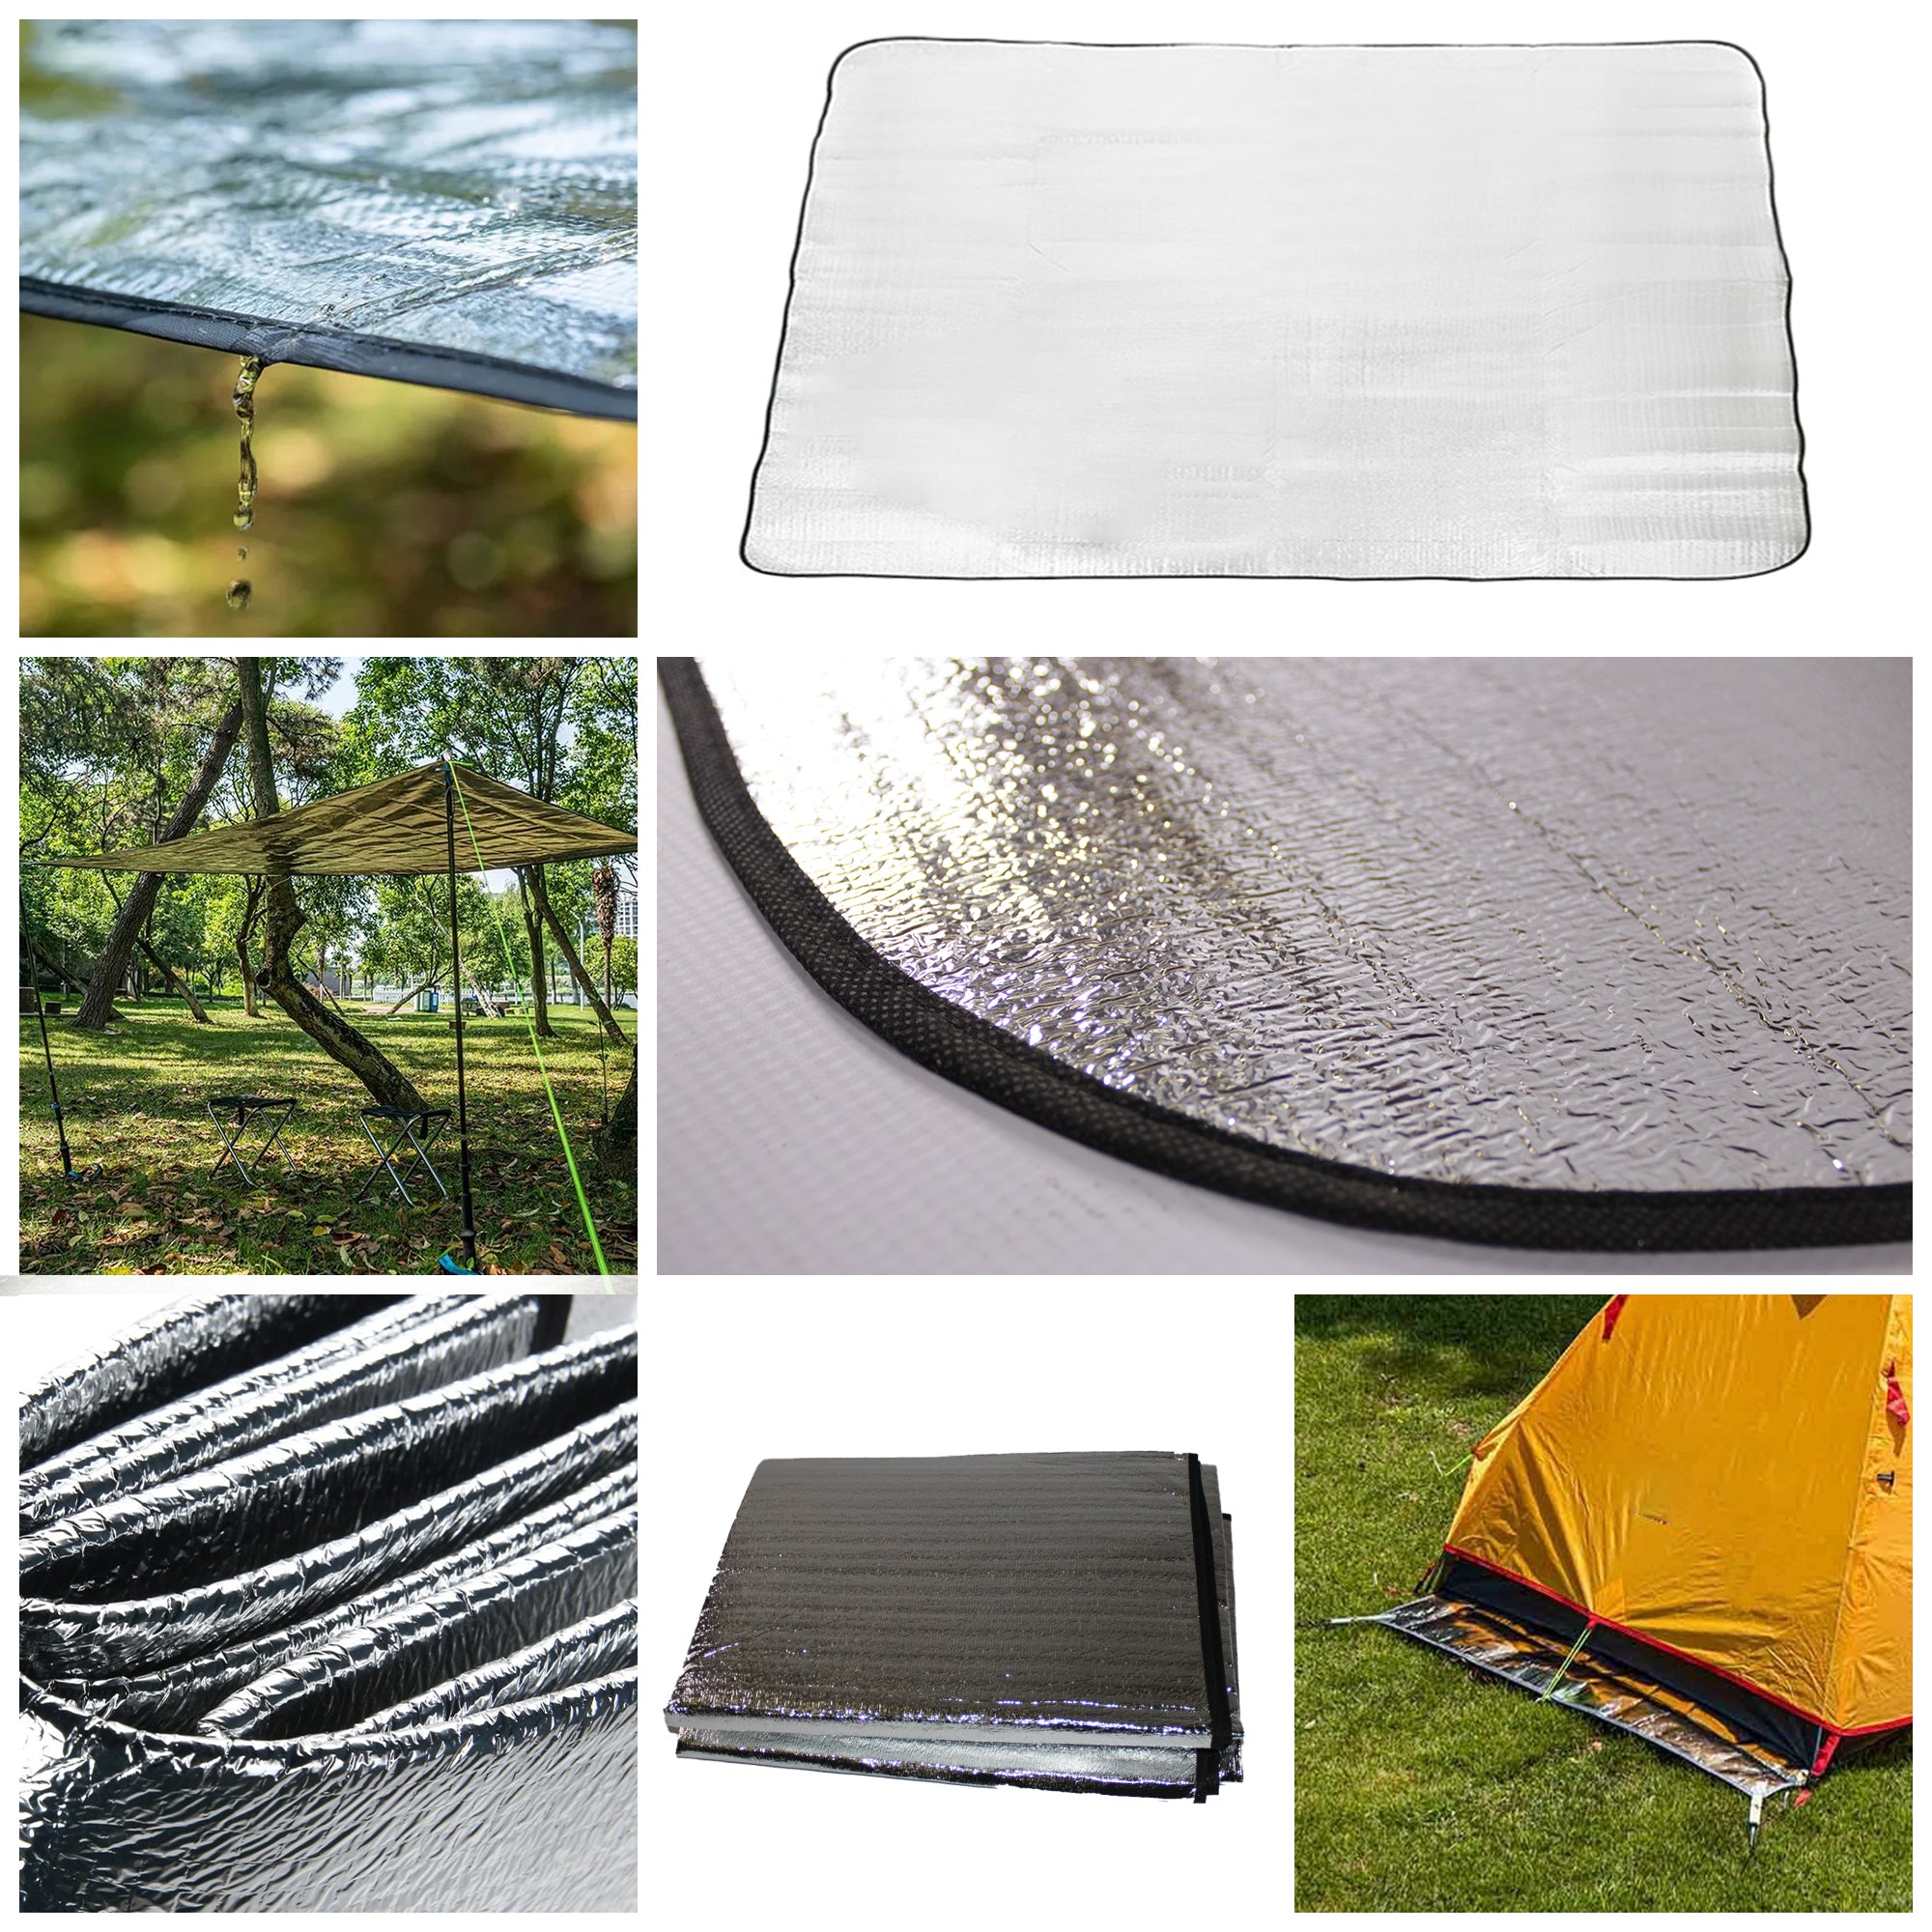 200x200cm Waterproof 3 Man Instant Tent & 190X190cm Foil & Foam Camping Mat